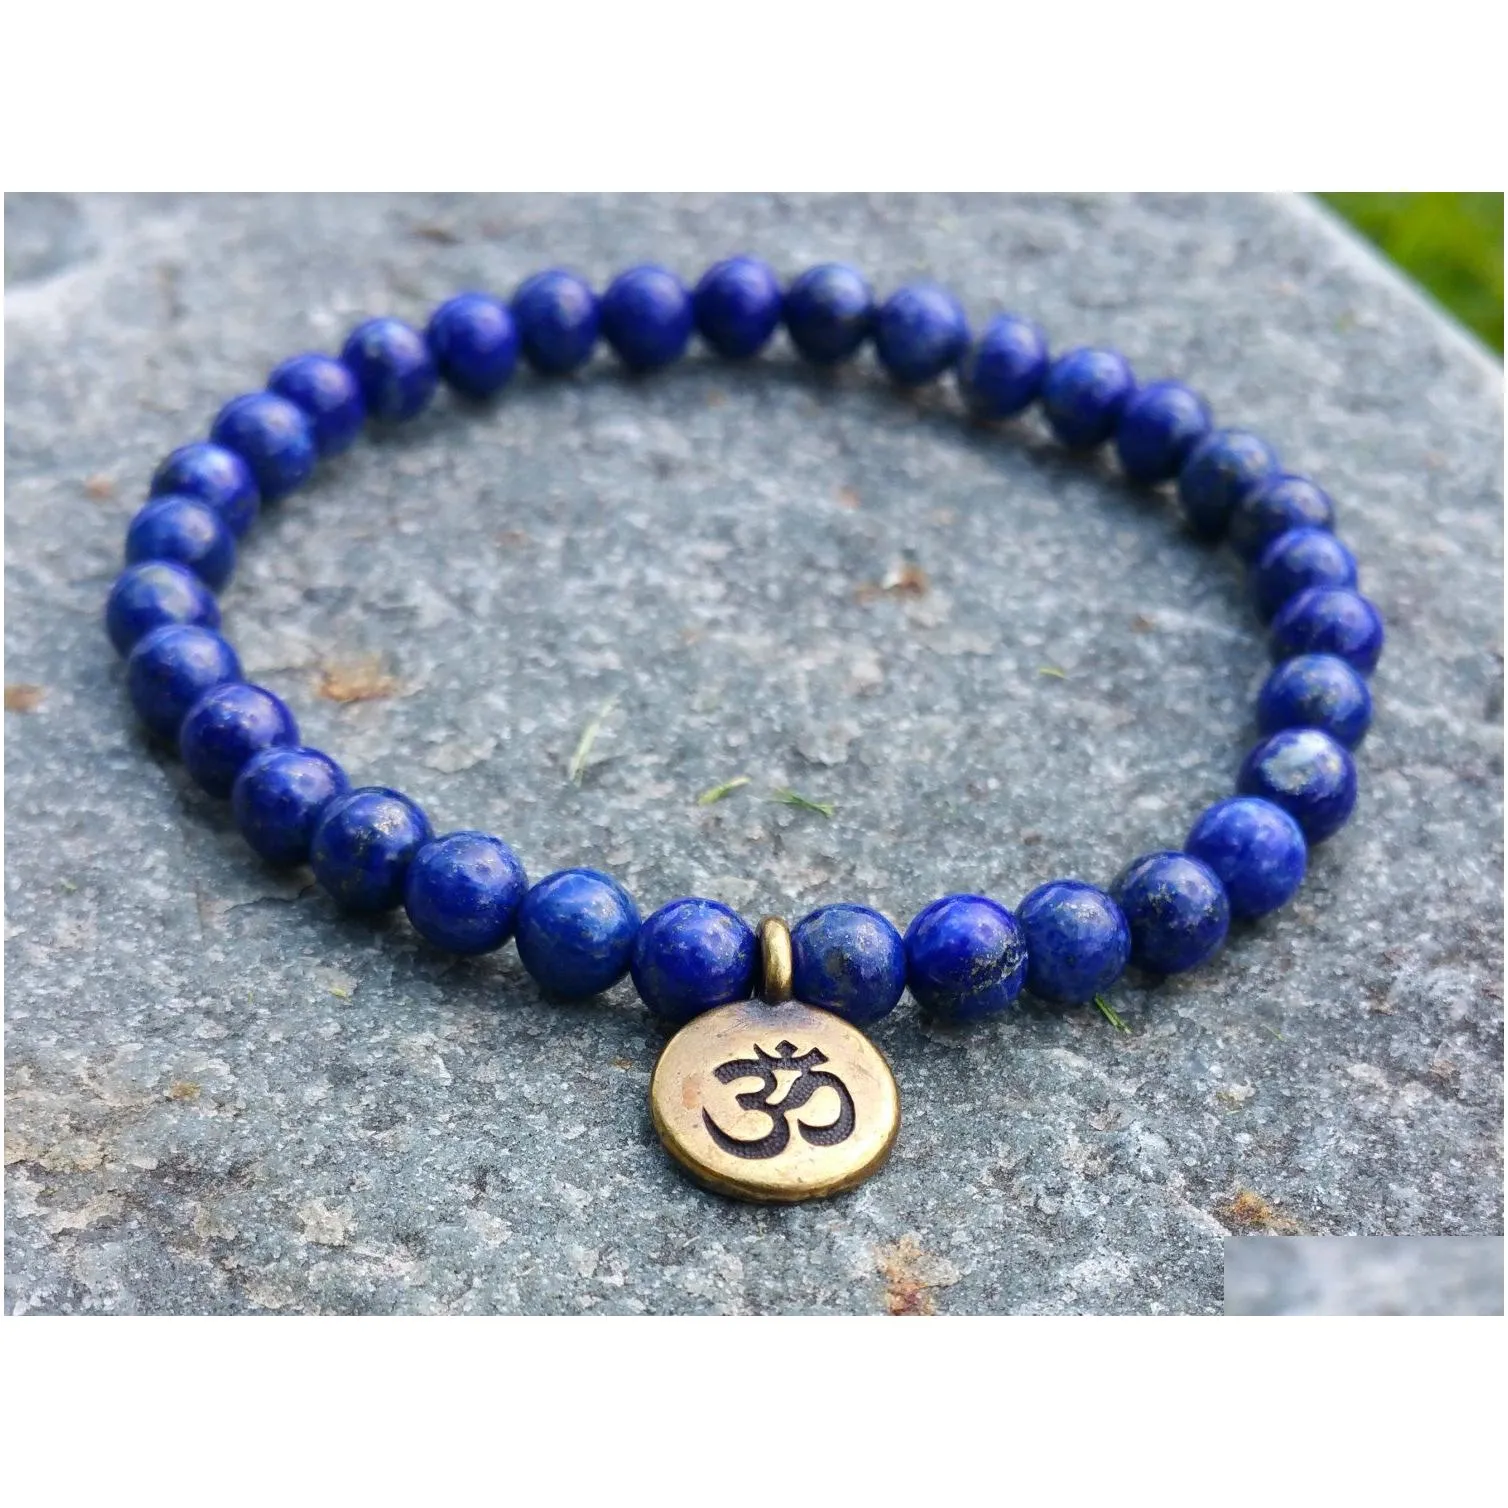 SN1106 Wholesale Handmade Beaded Bracelet 6mm Lapis Lazuli Natural Stone Beads Antique Brass Ohm Lotus Buddha Charm Bracelet